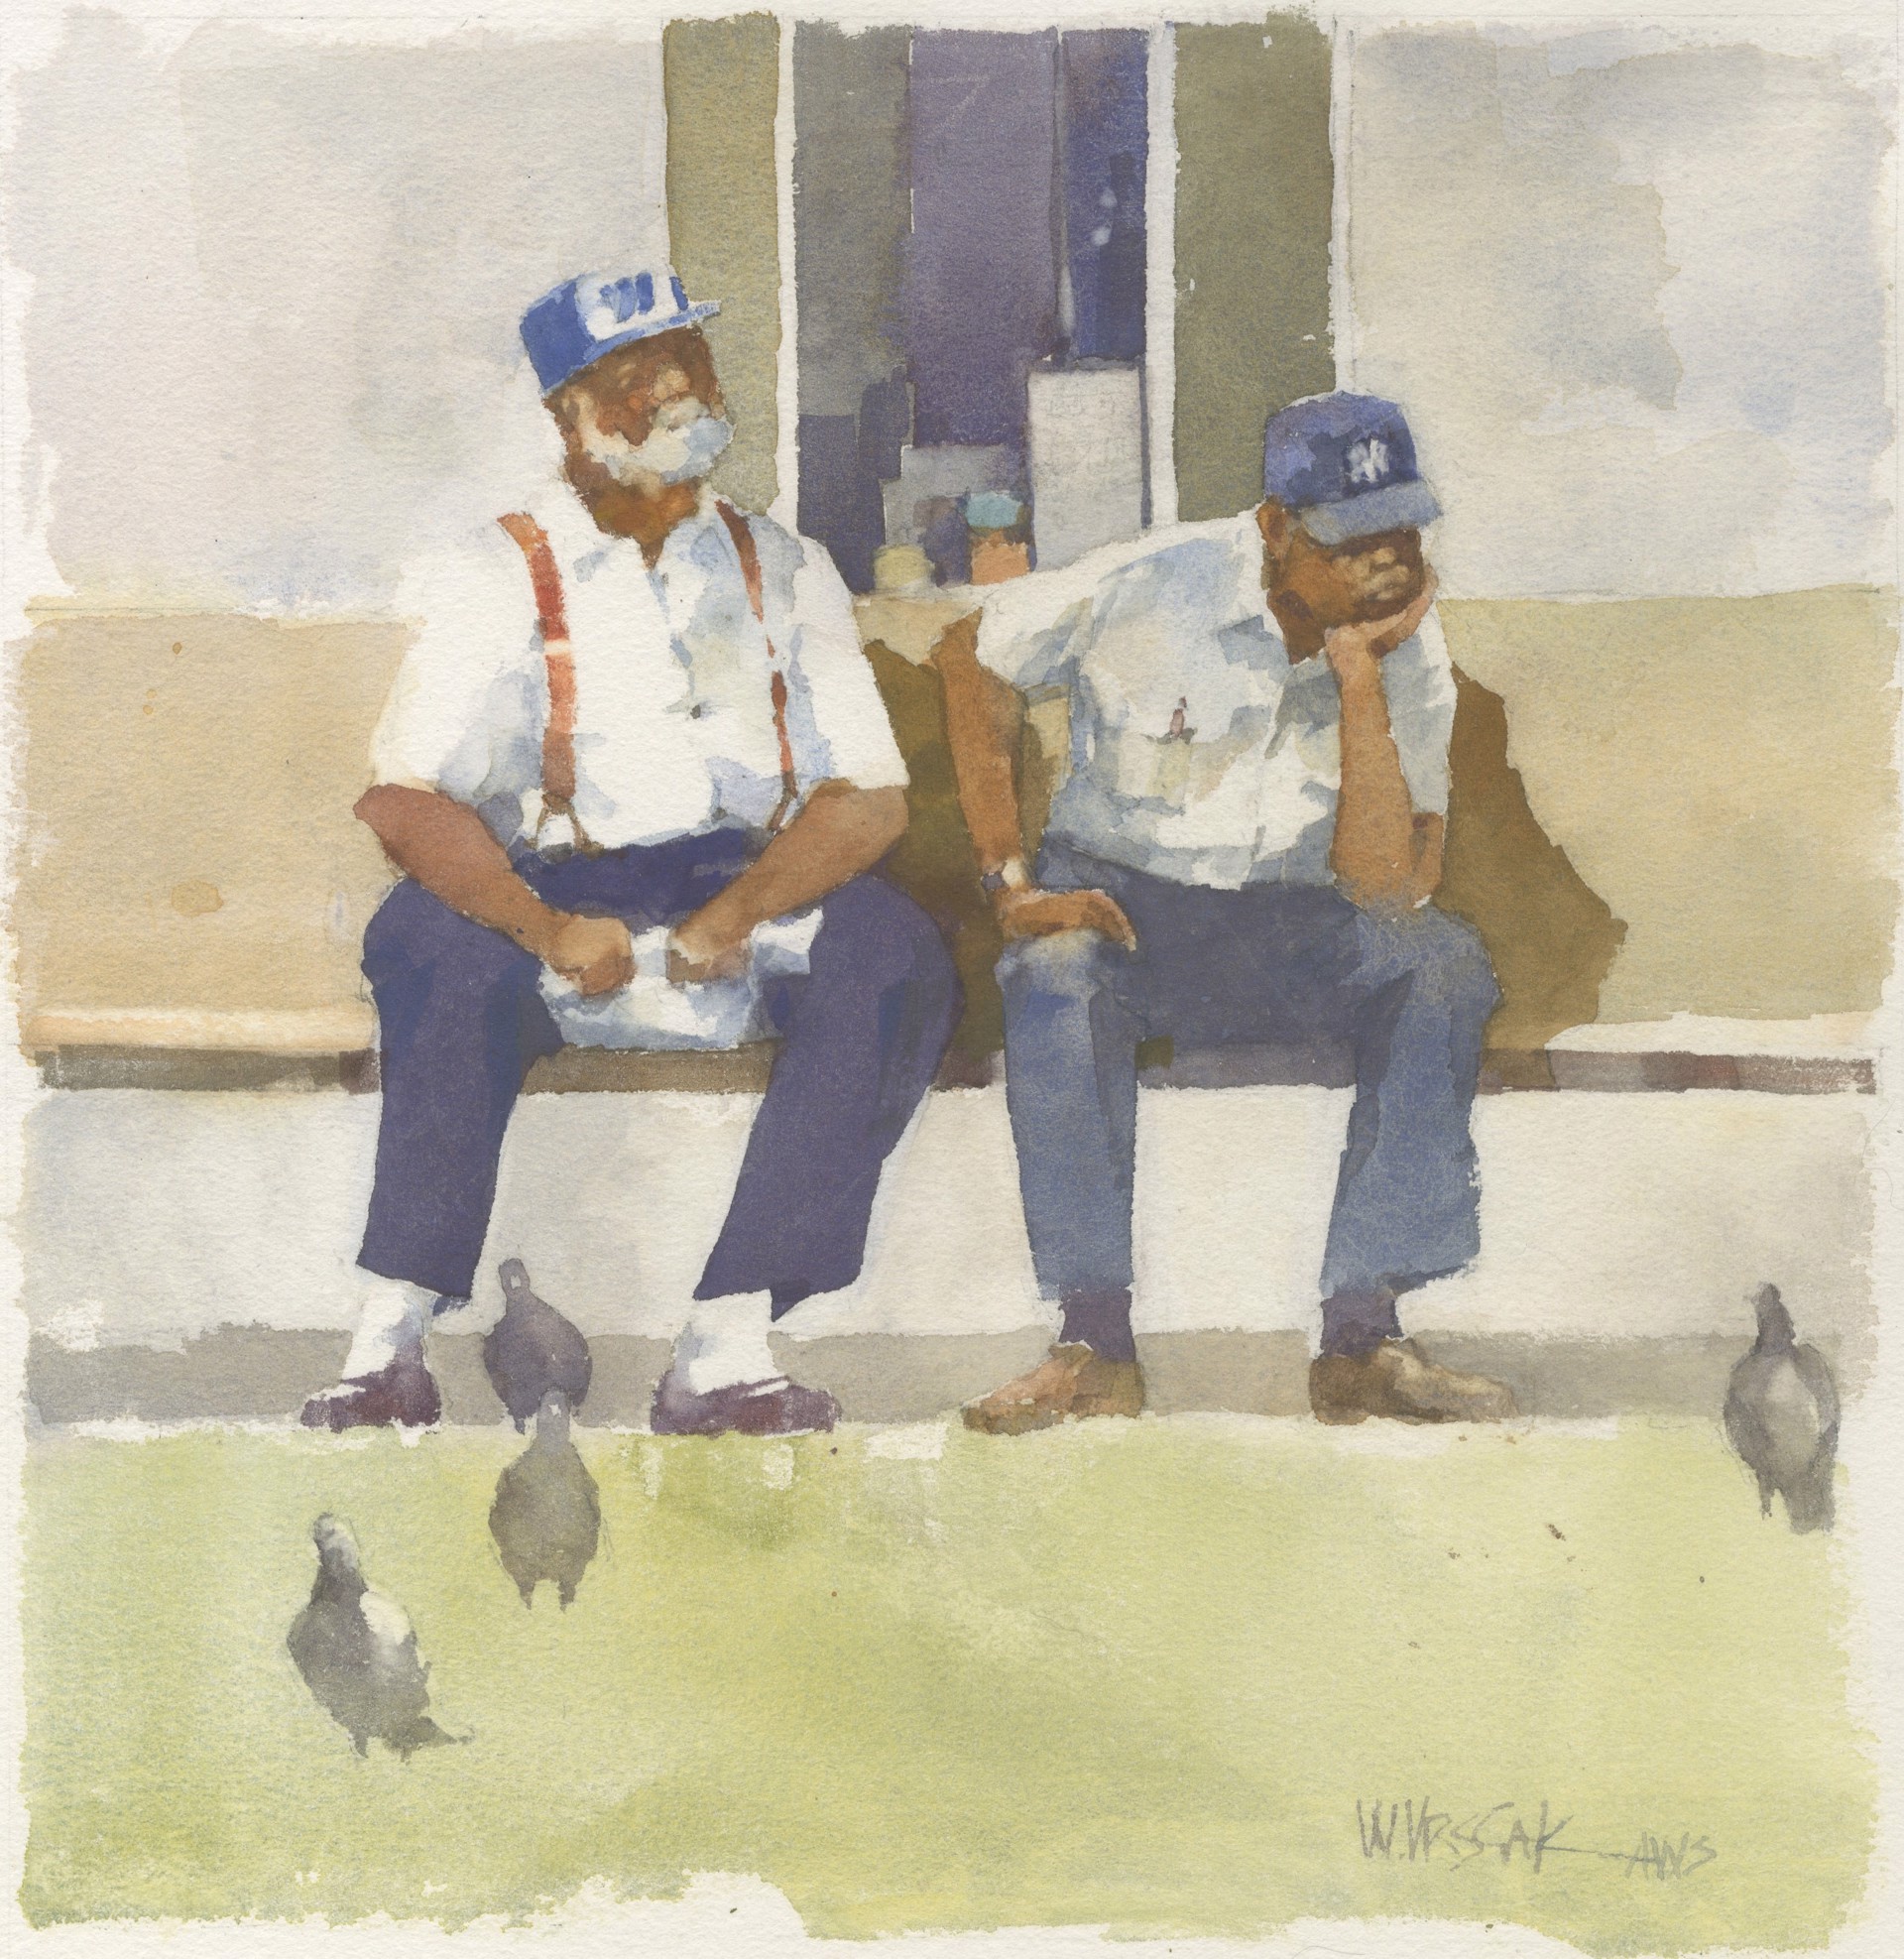 Market Square Regulars - Contemplating A Pigeon by Bill Vrscak